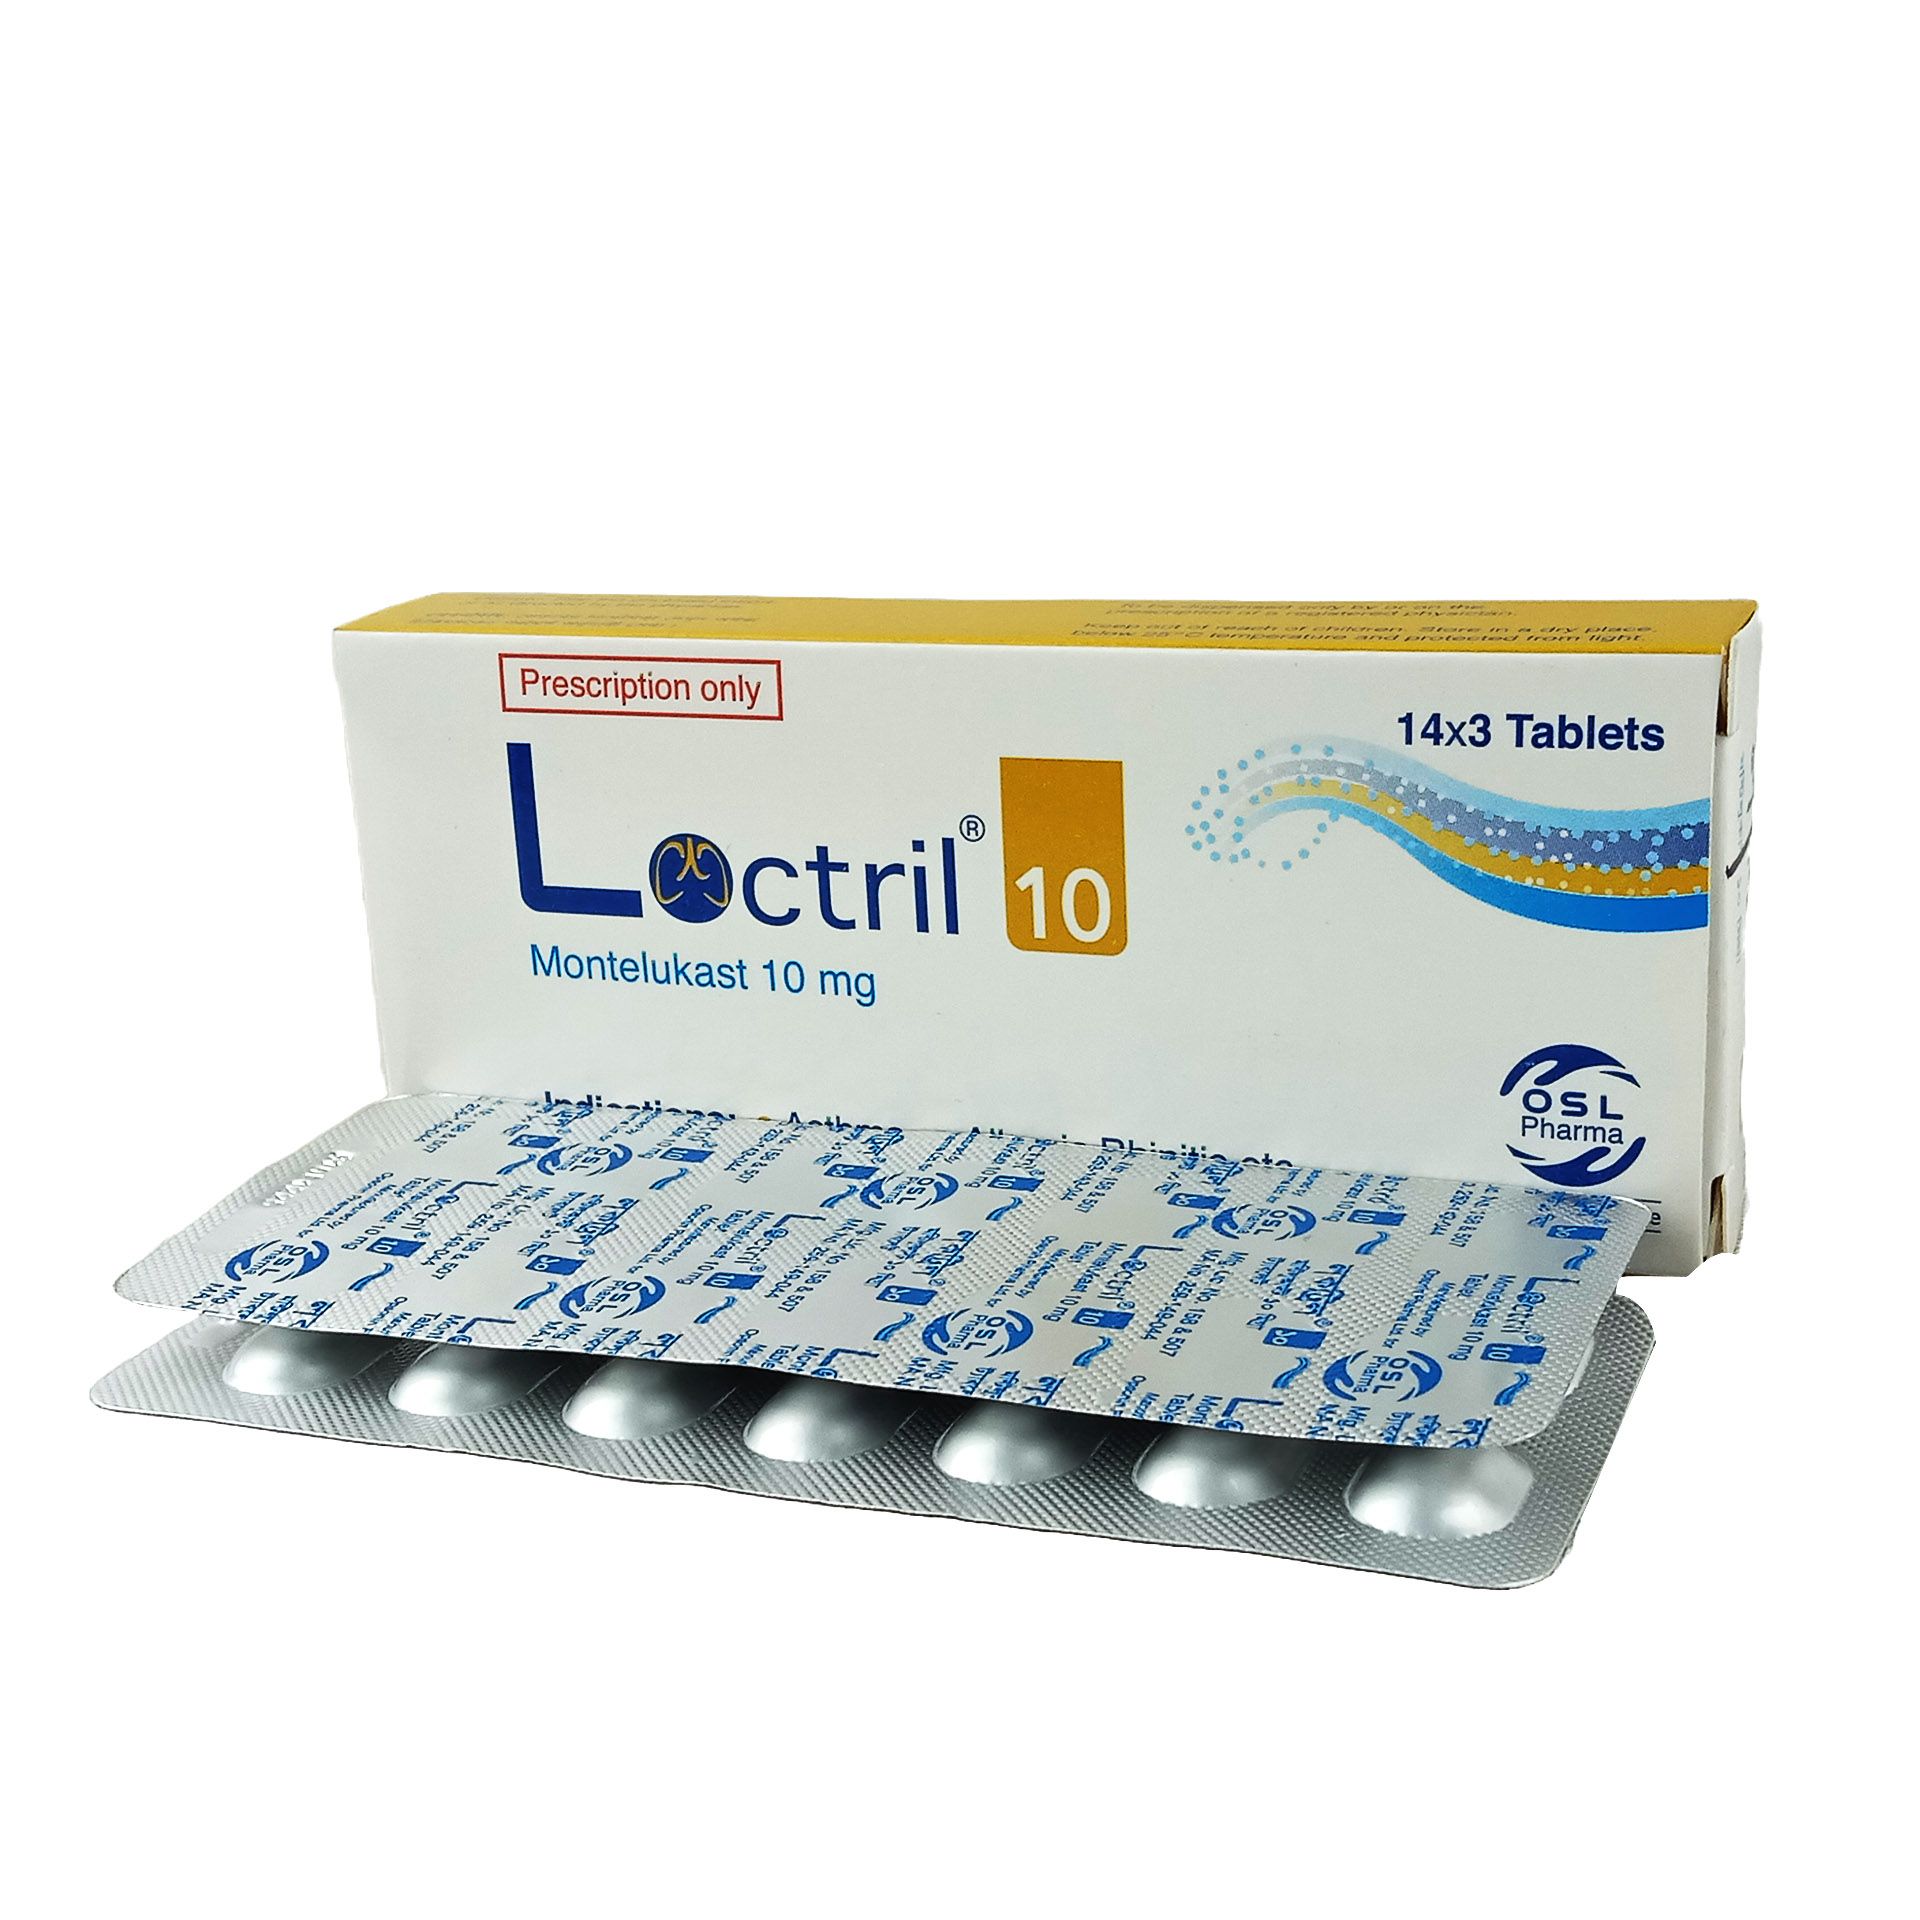 Loctril 10mg Tablet